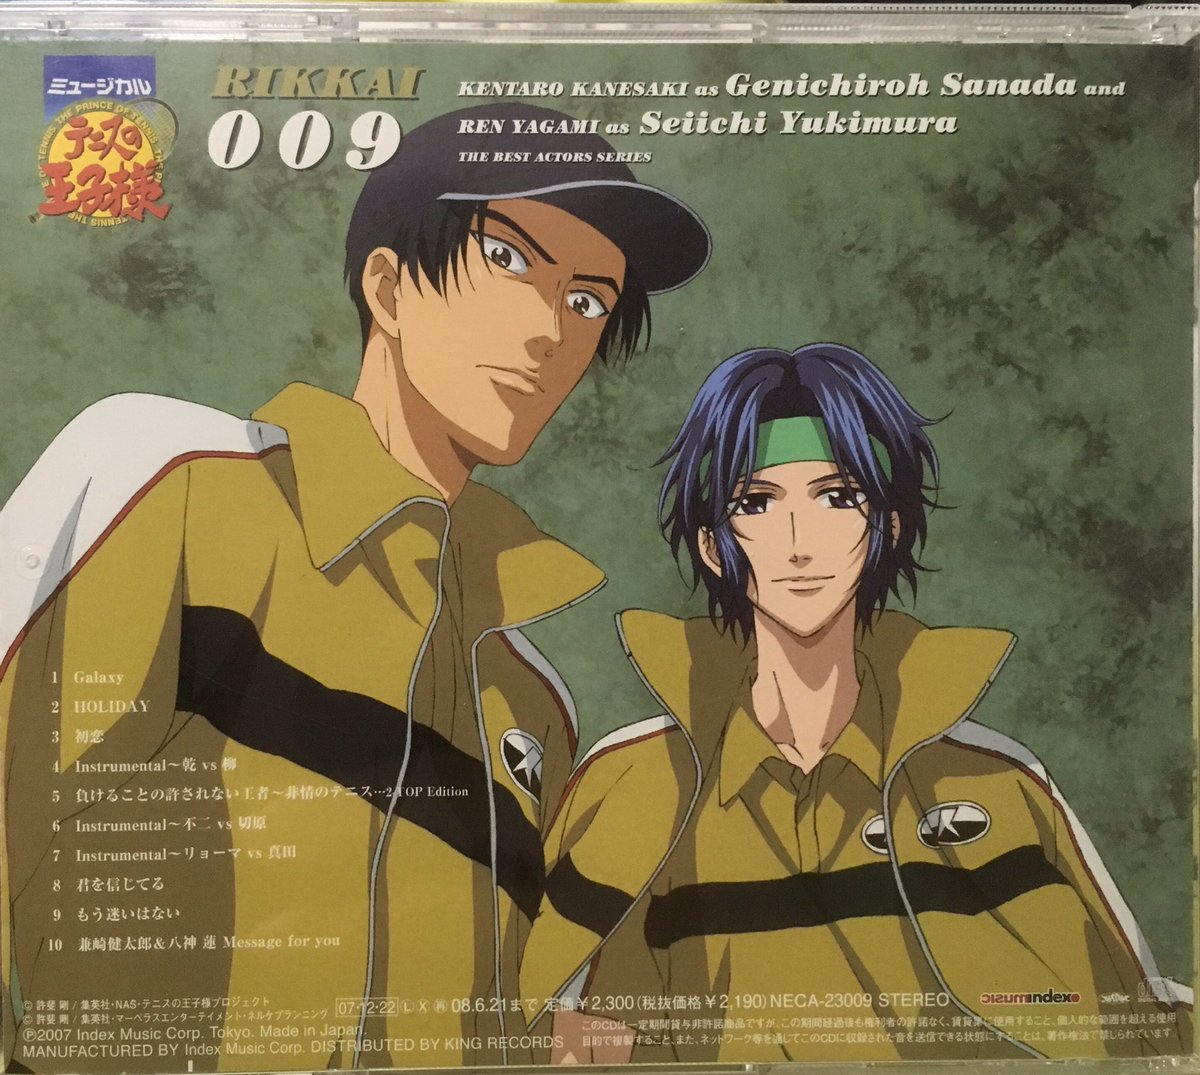 Let's start with Best Actors Series 009: Kentaro Kanesaki as Genichiroh Sanada and Ren Yagami as Seiichi YukimuraIt's basically CD full of love songs